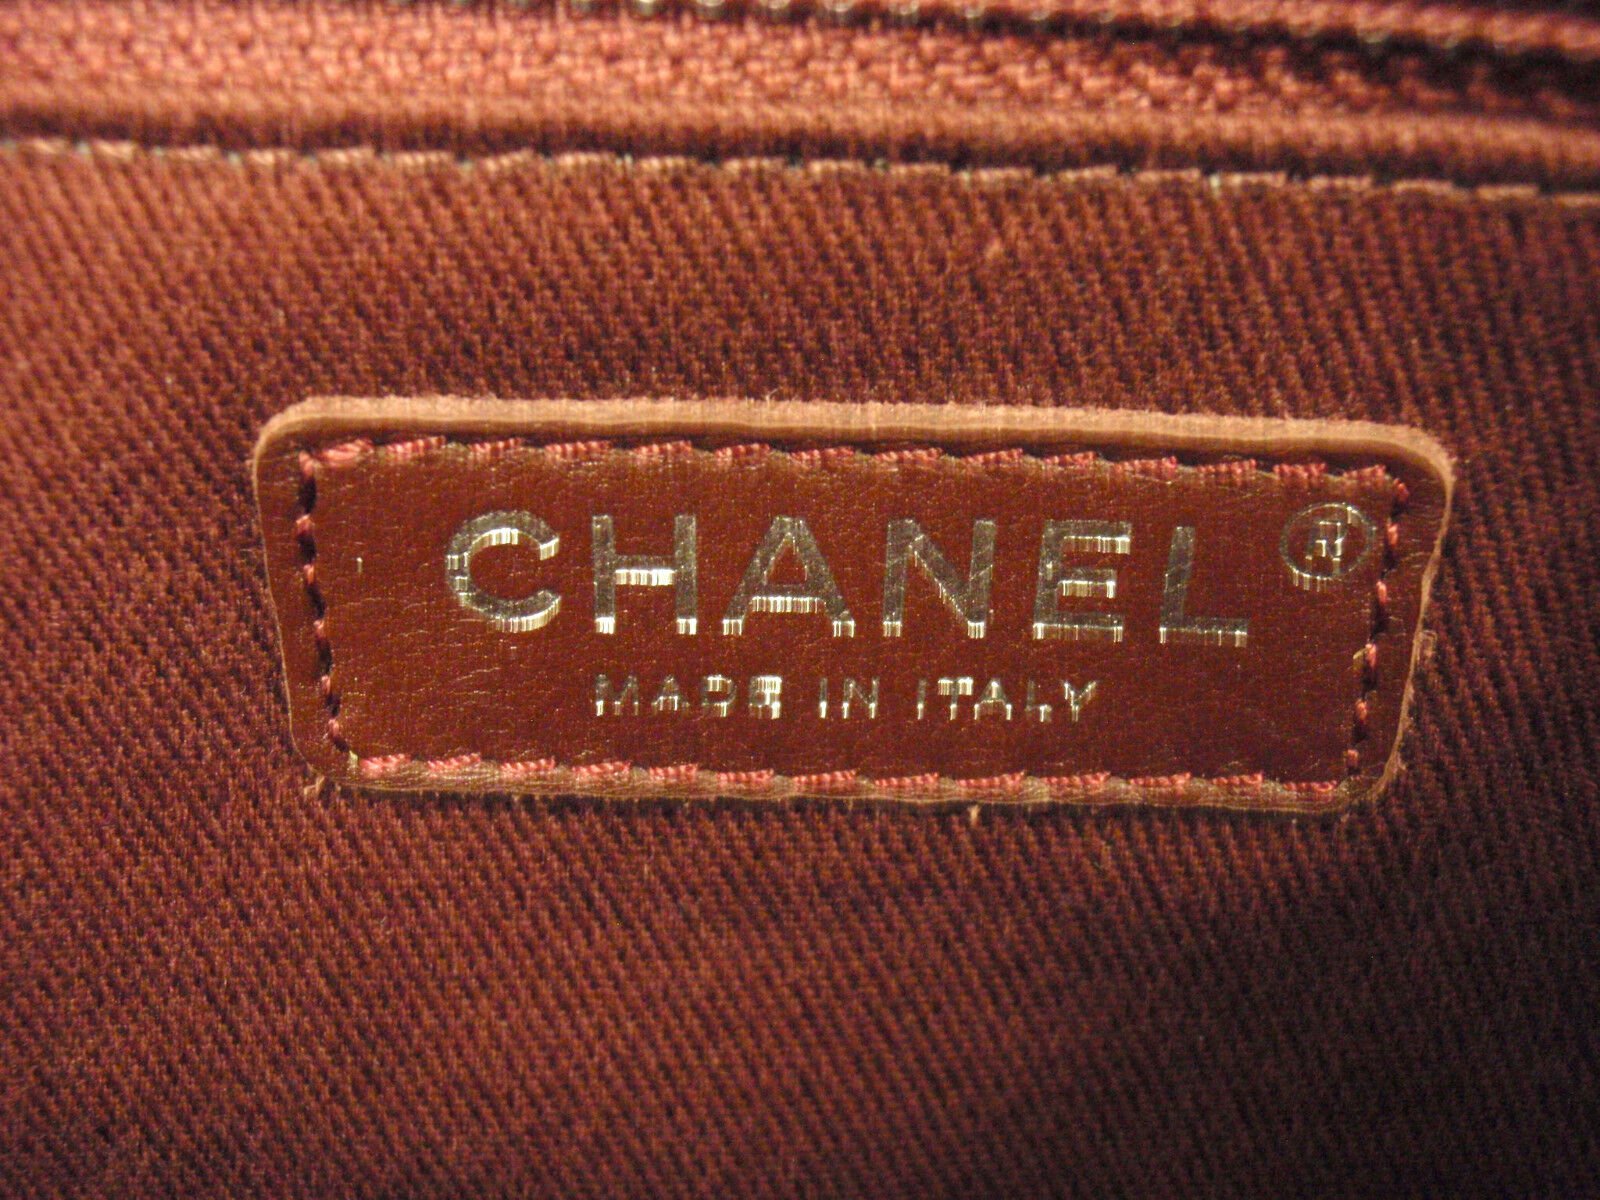 Chanel Istanbul Soft Caviar Tote Handbag